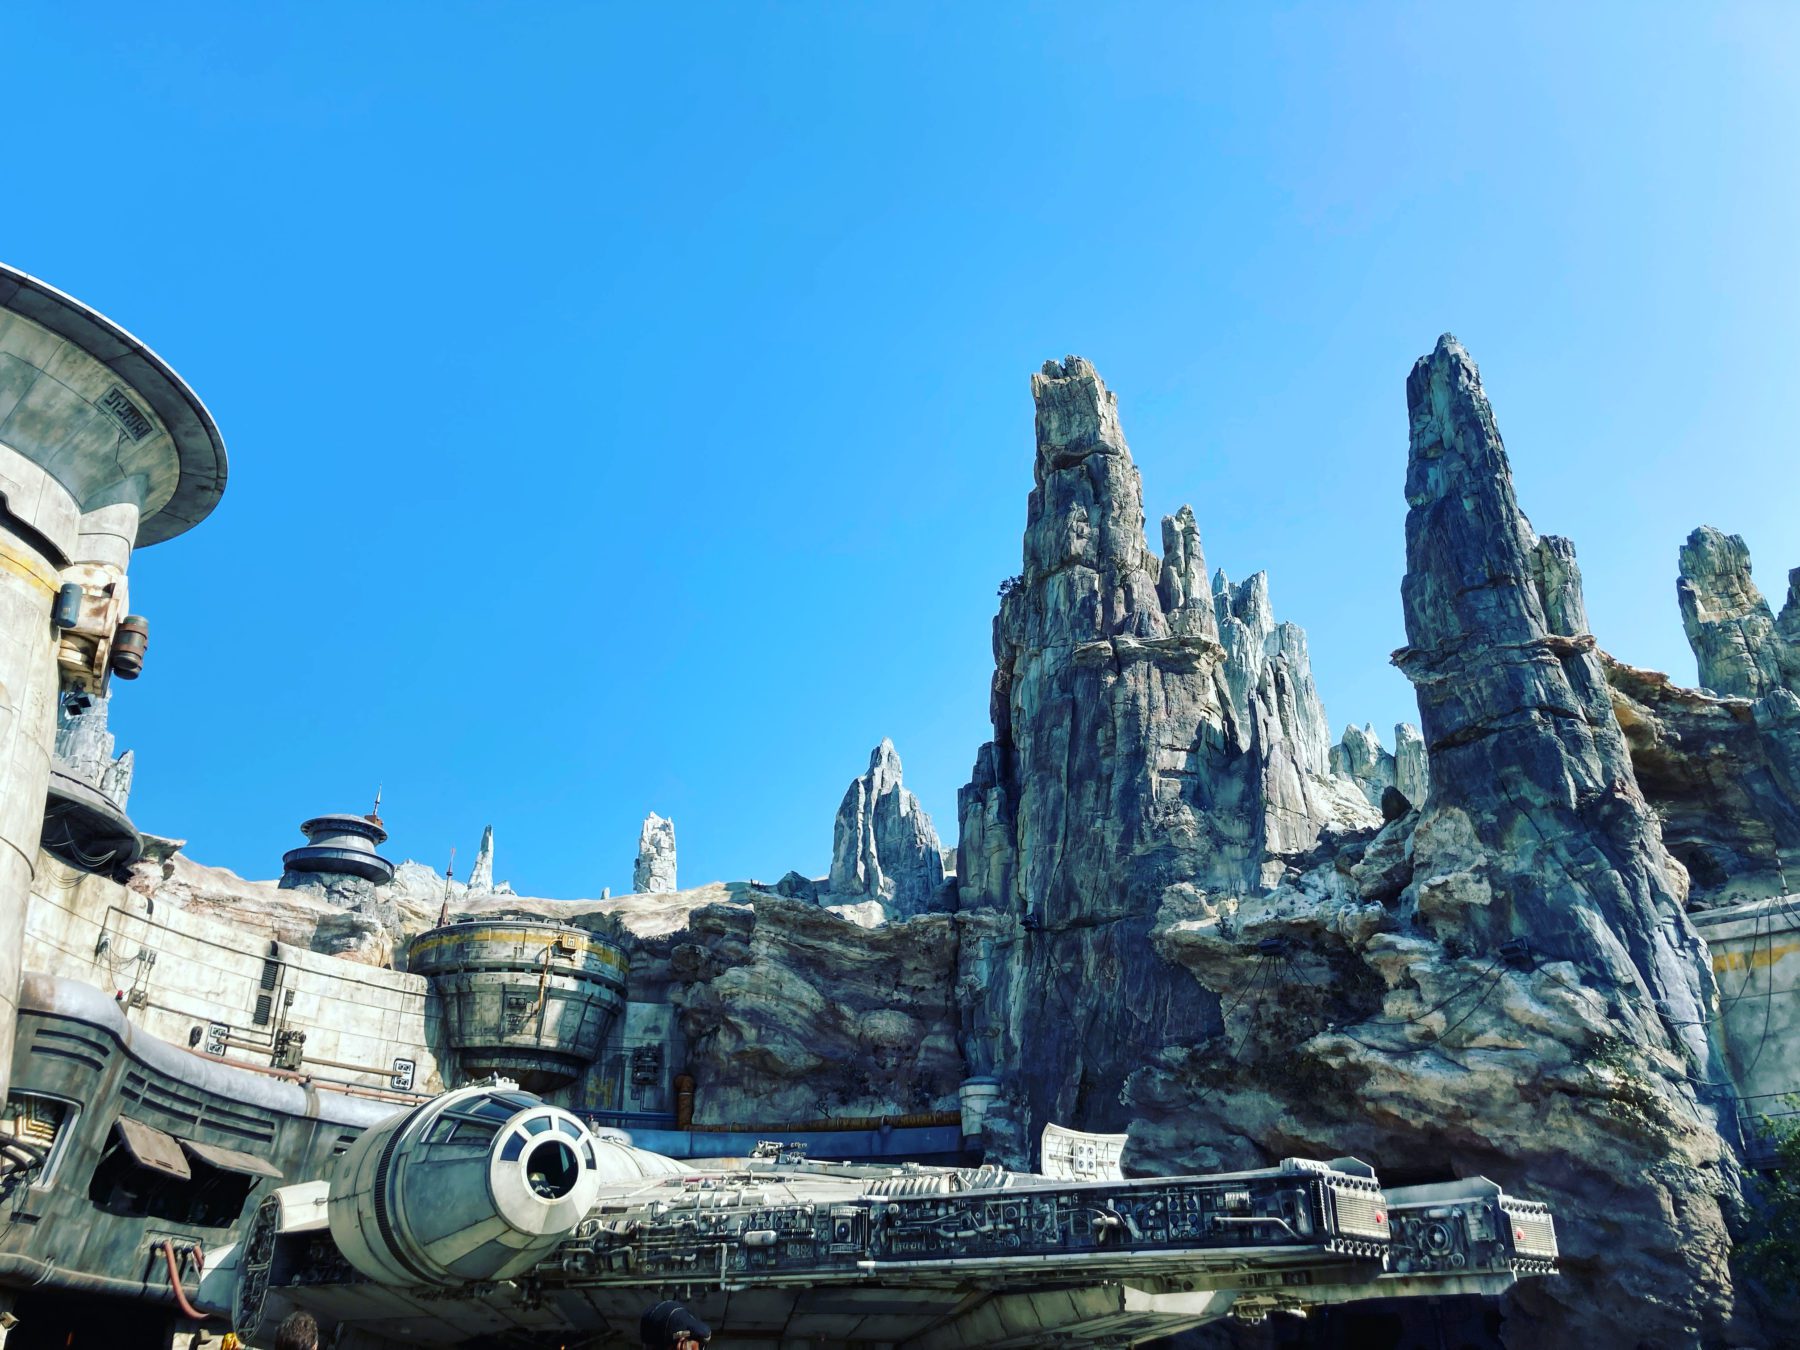 Disneyland Star Wars Ride- Rise of the Resistance